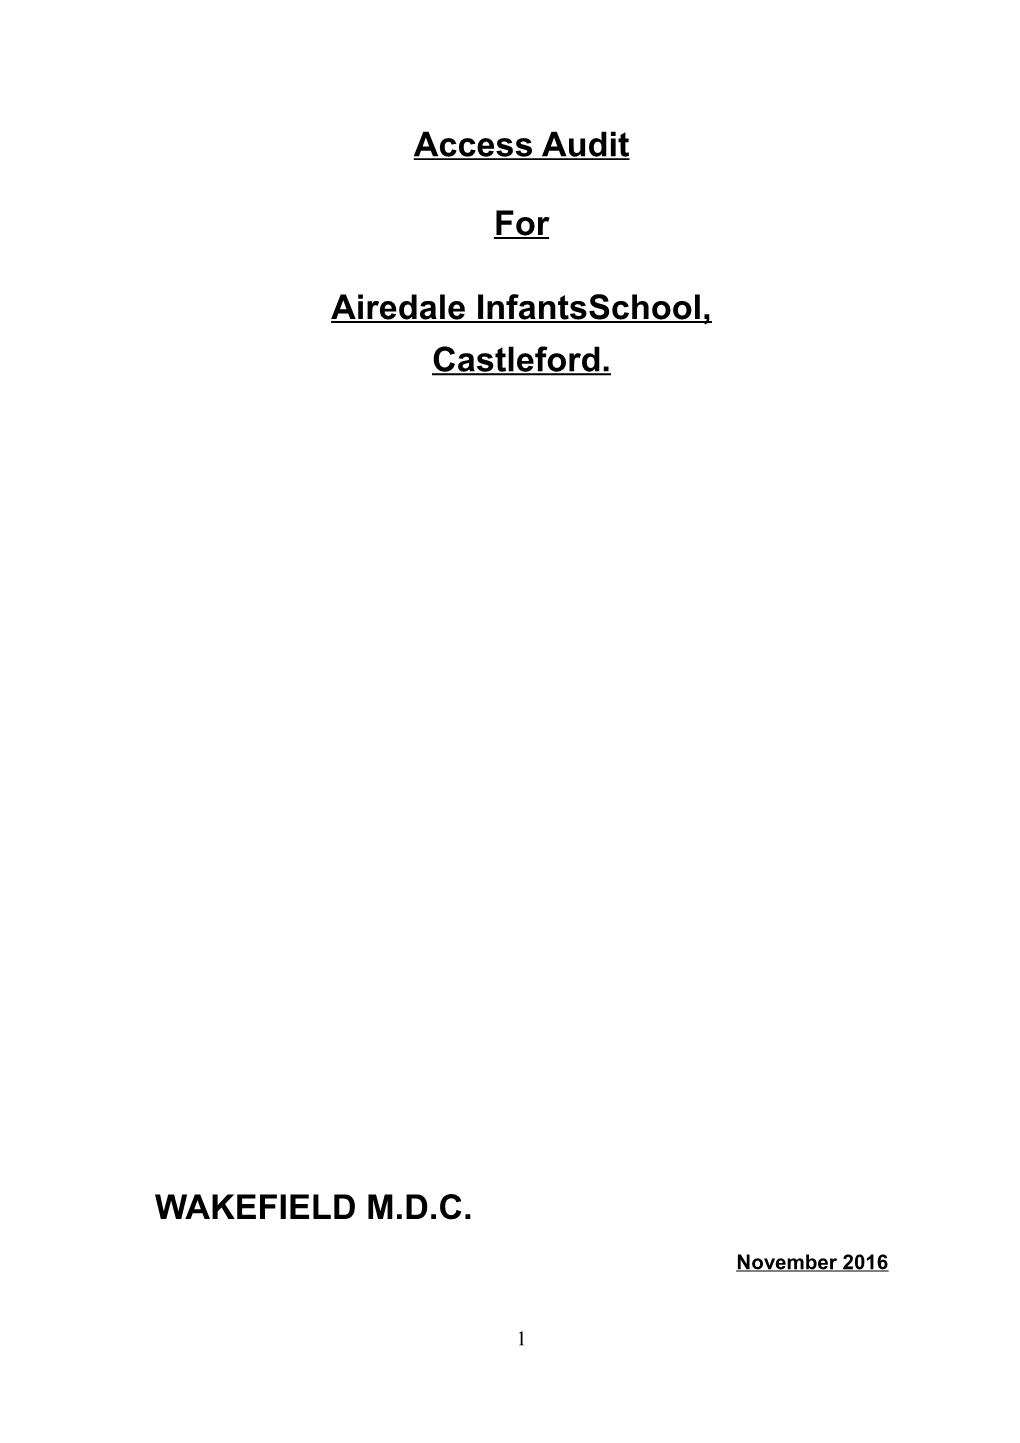 Airedale Infantsschool